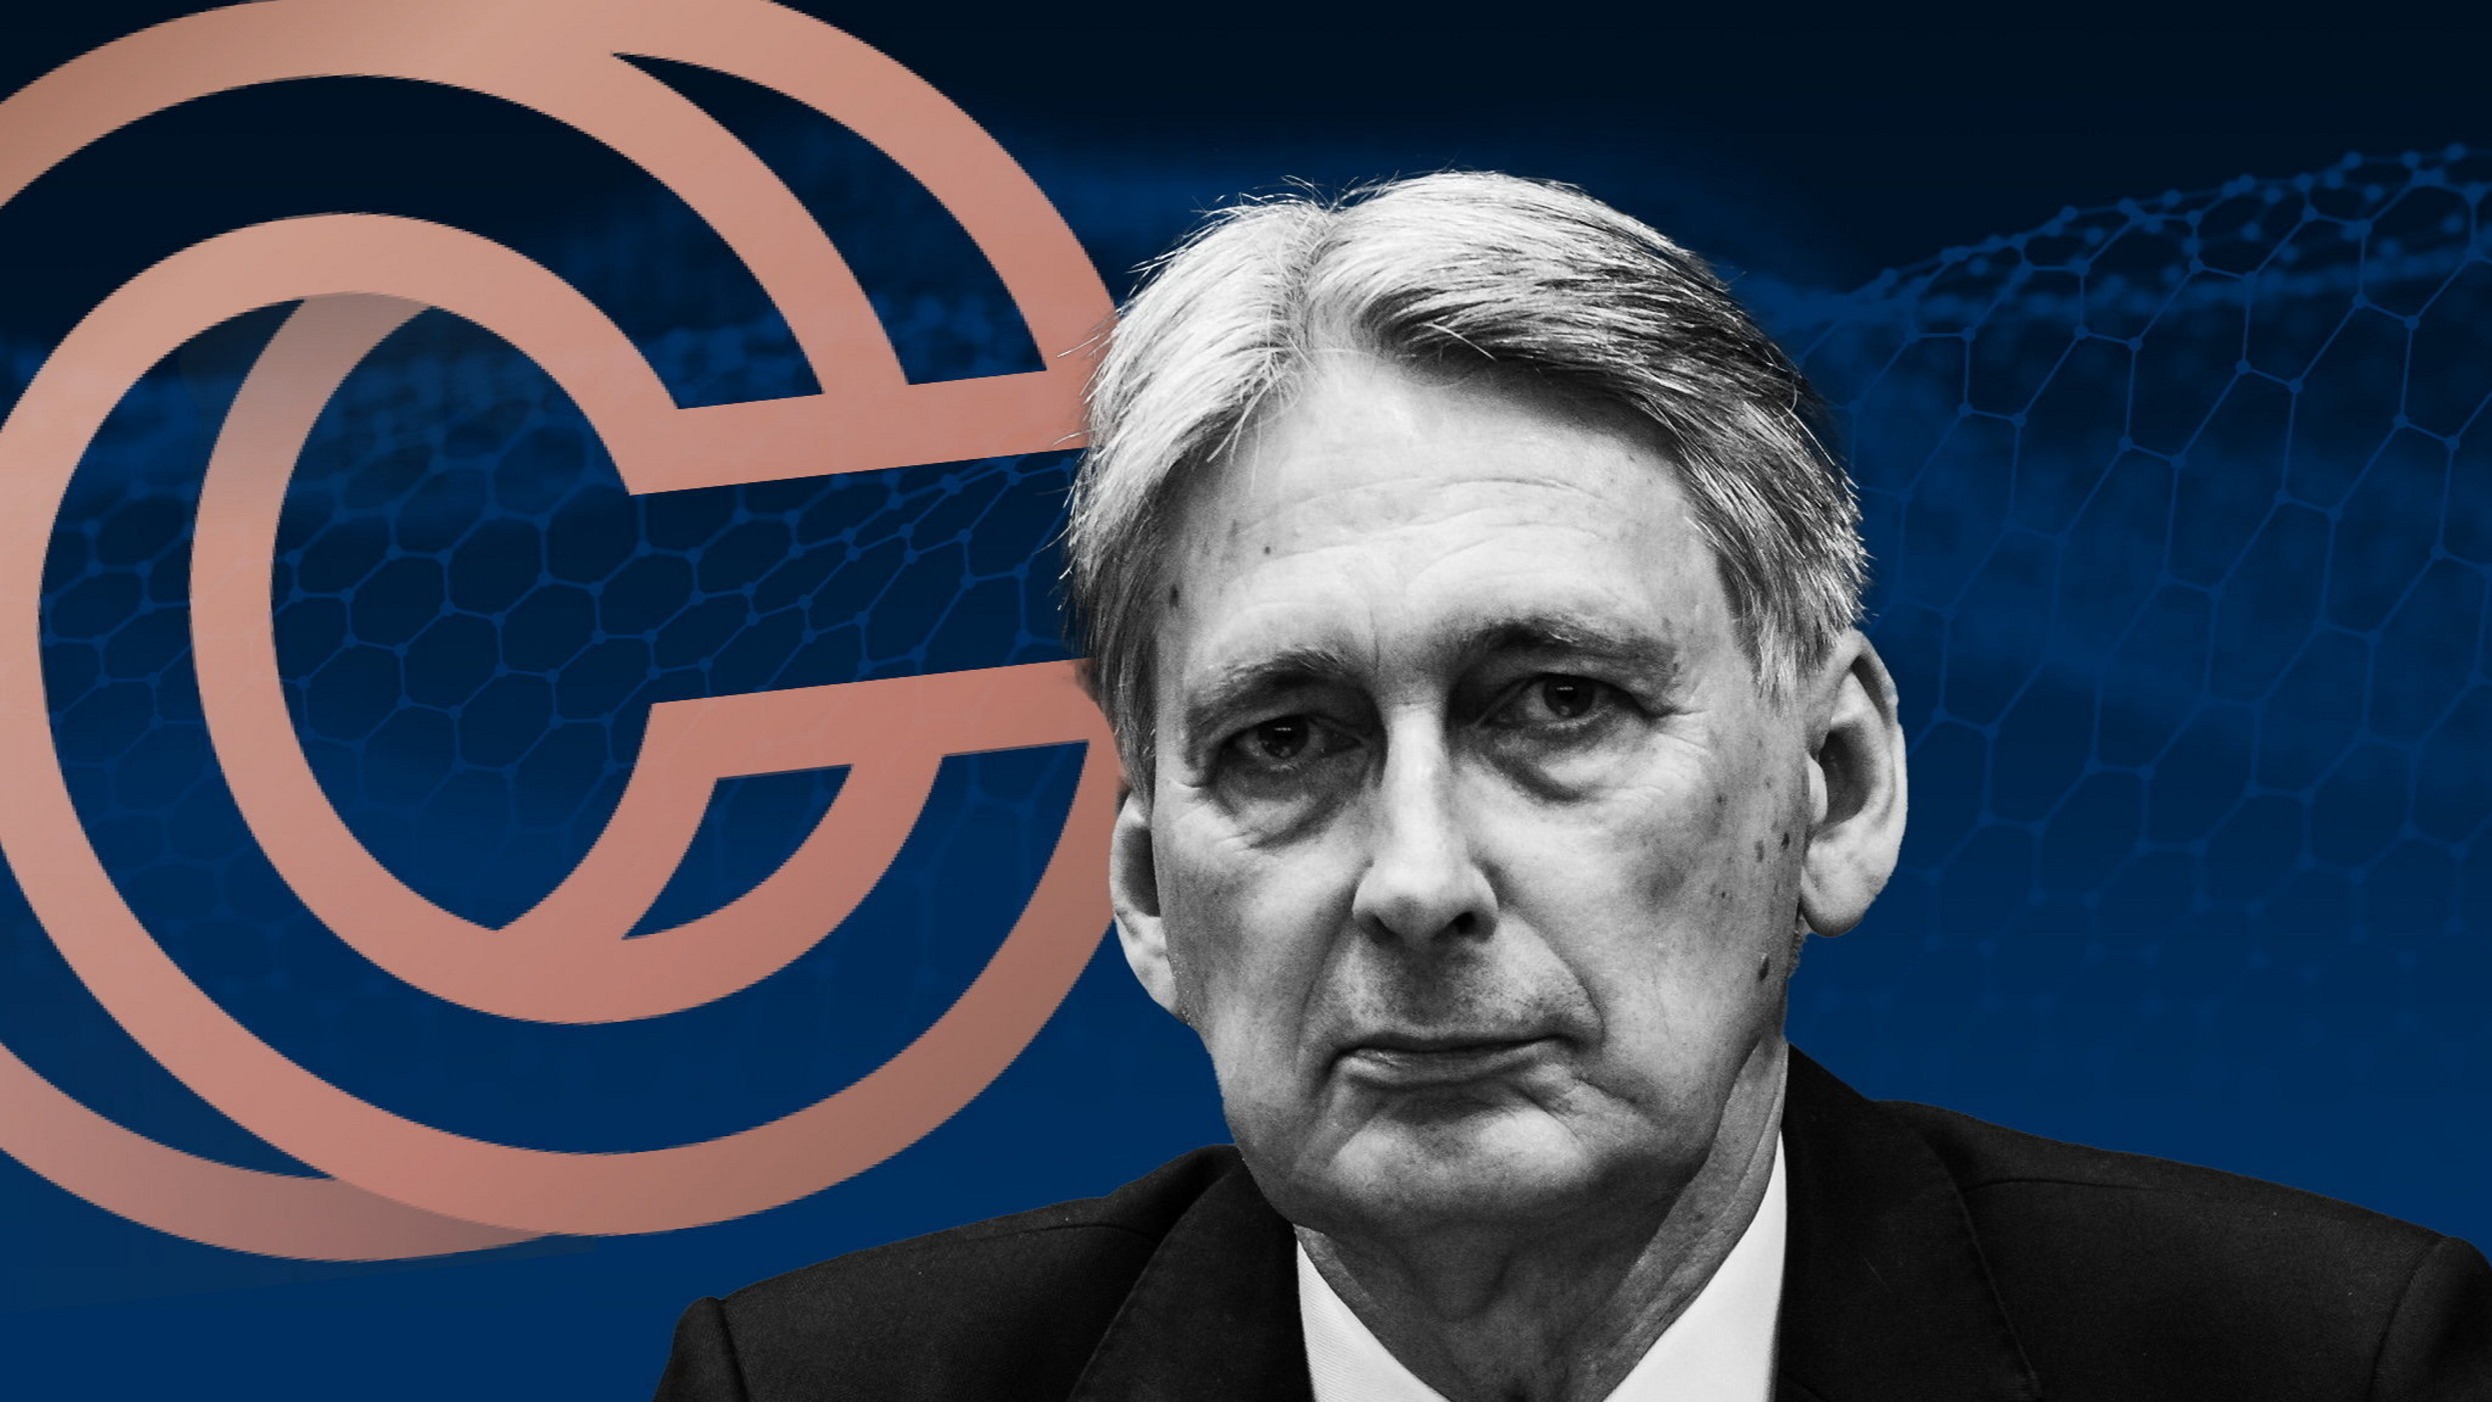 Ex-UK chancellor Hammond to chair crypto exchange Copper